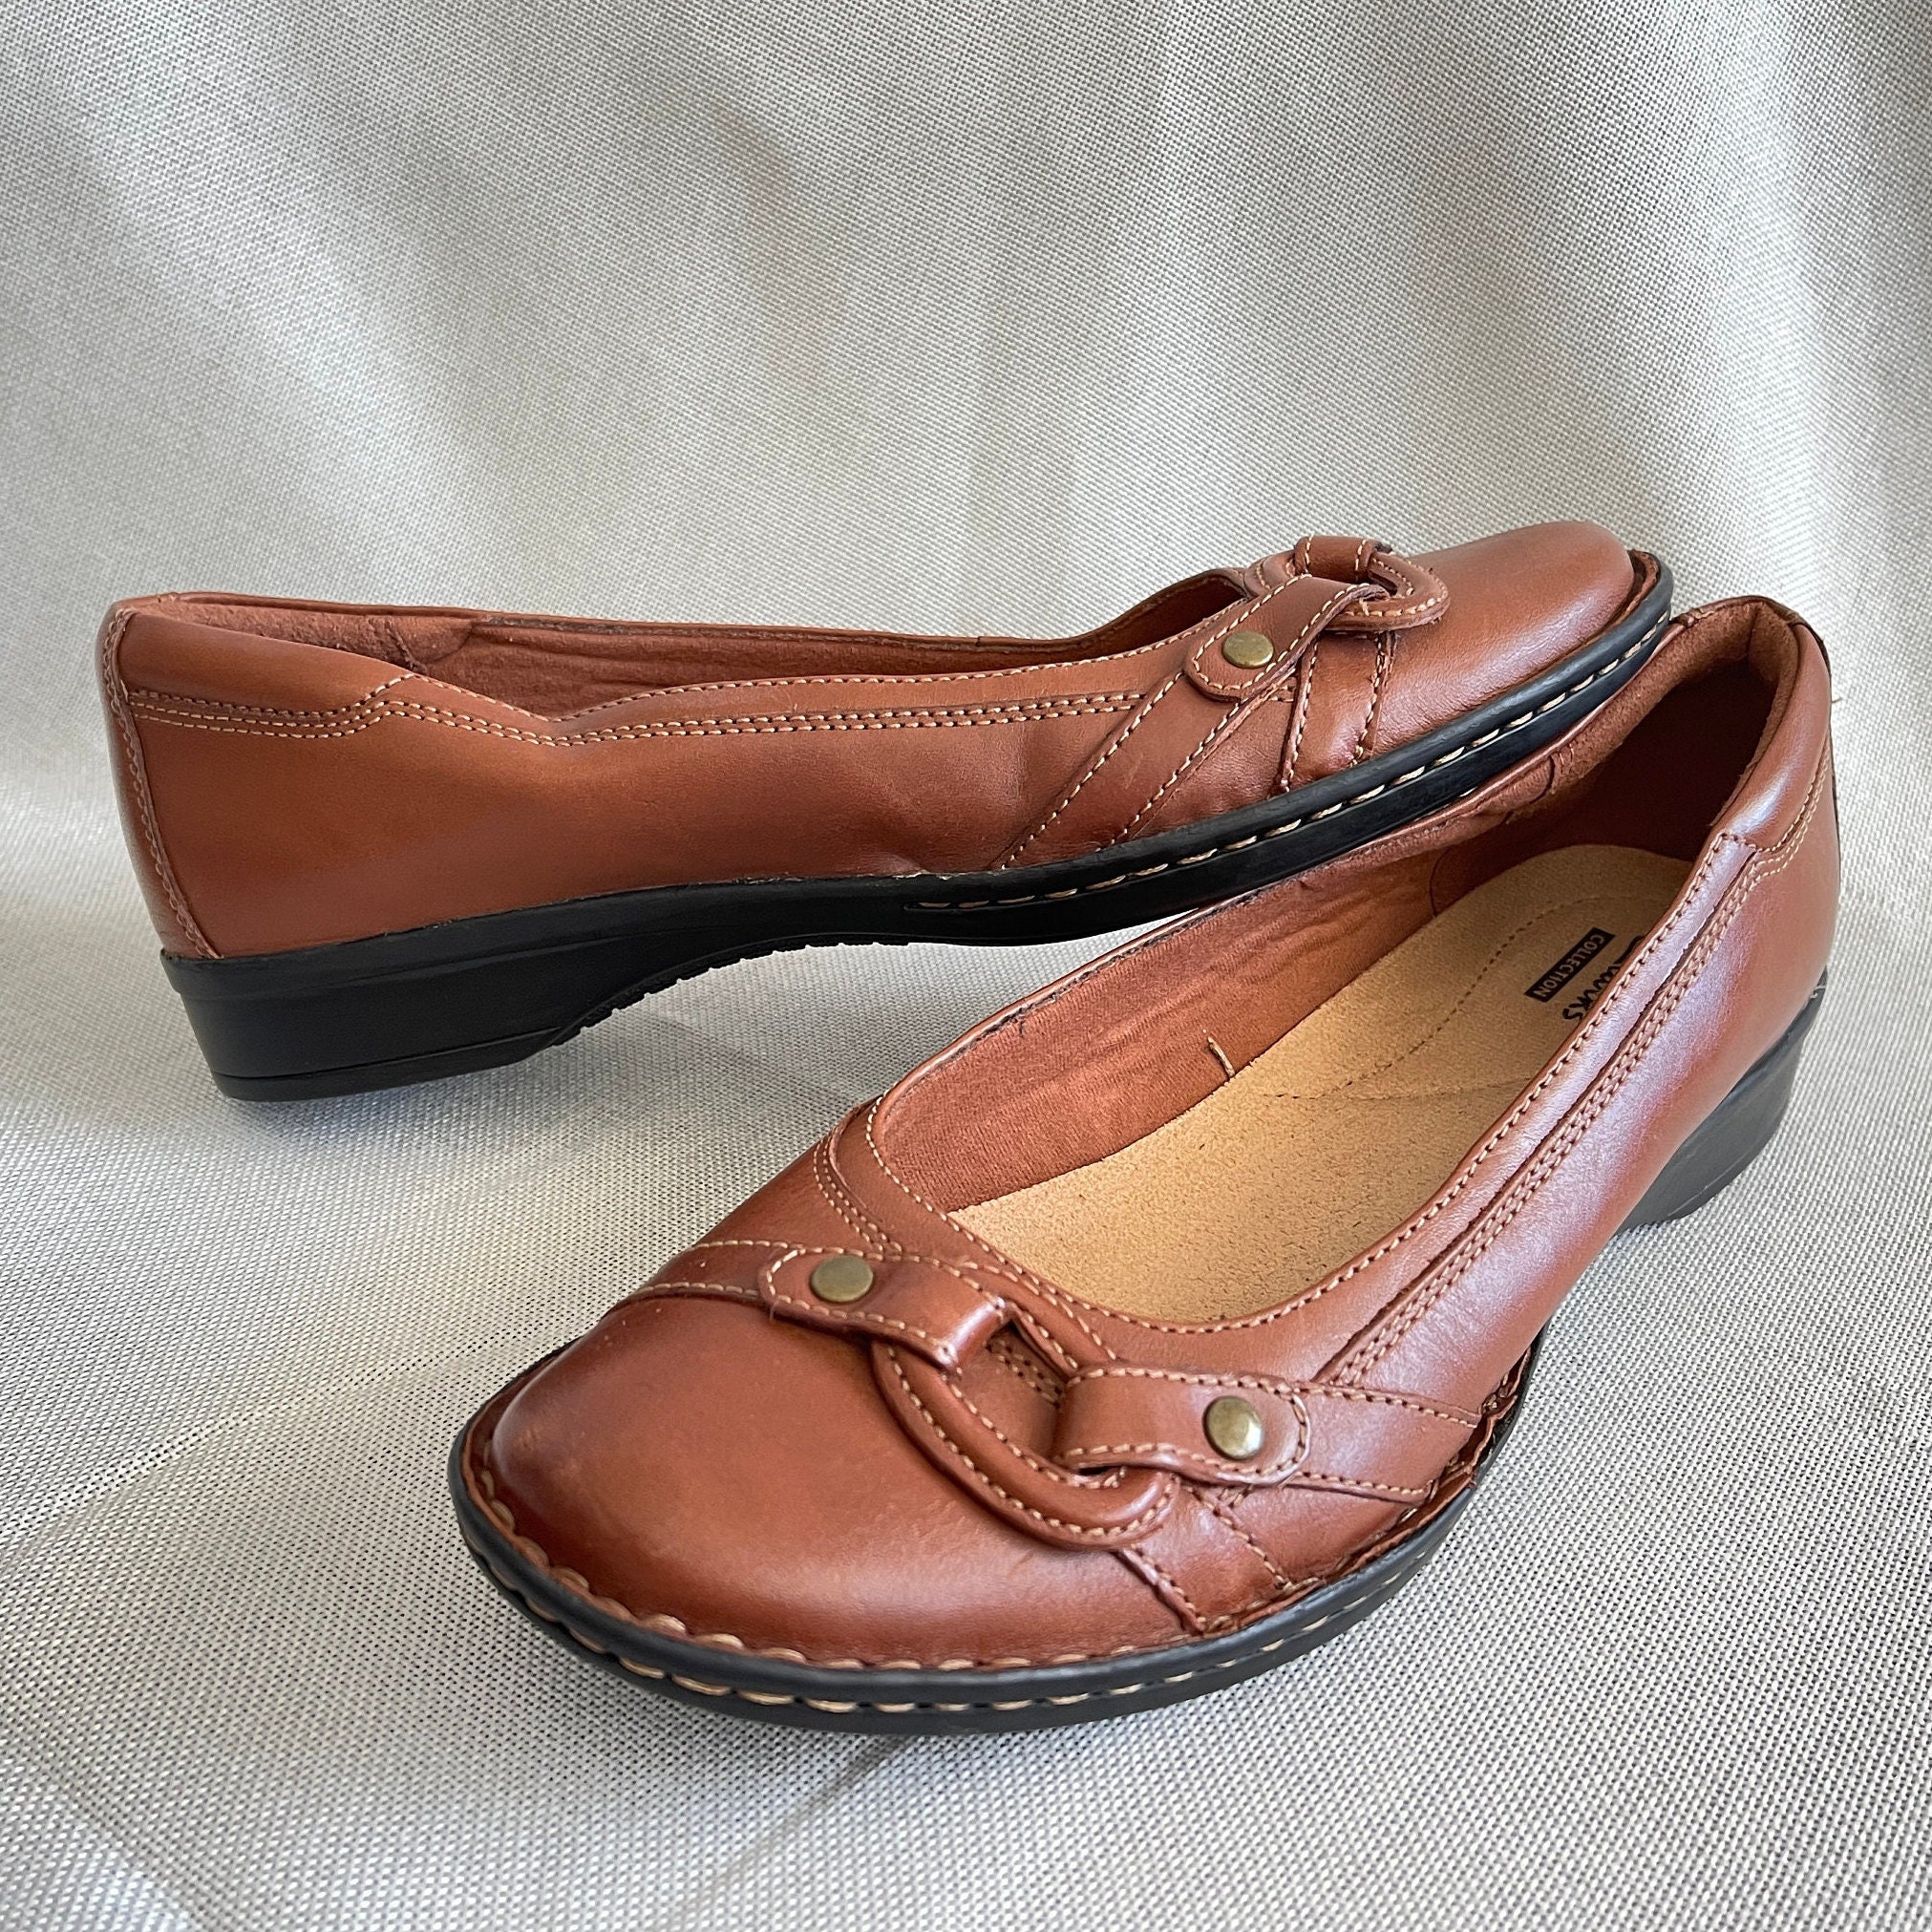 Zapatos Clarks de cuero Brown talla - Etsy México